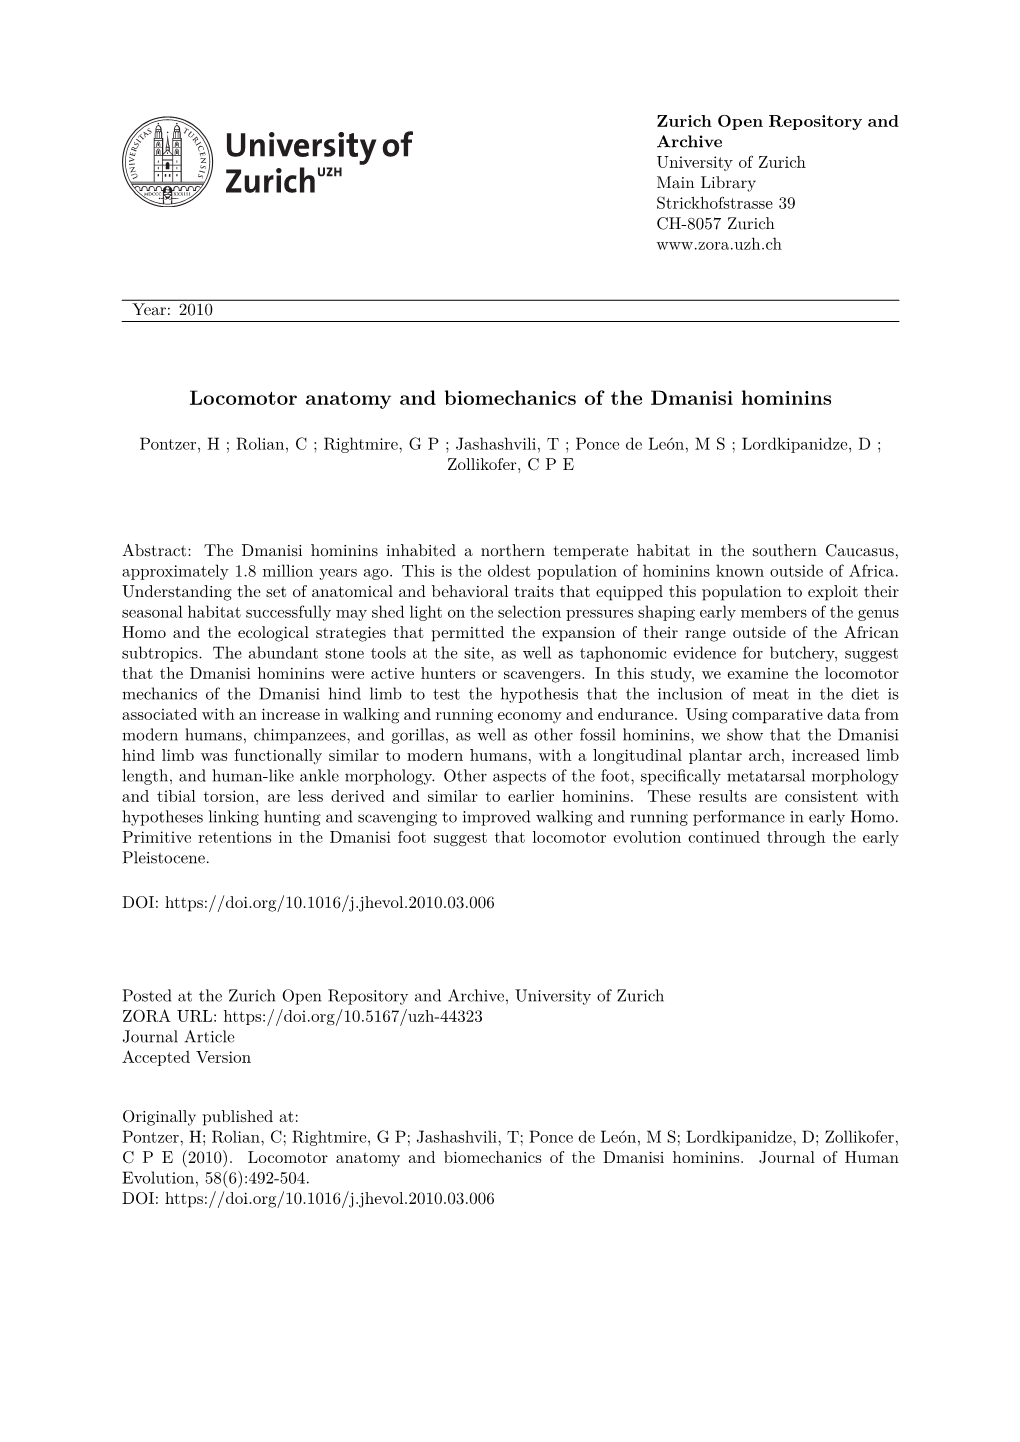 Locomotor Anatomy and Biomechanics of the Dmanisi Hominins